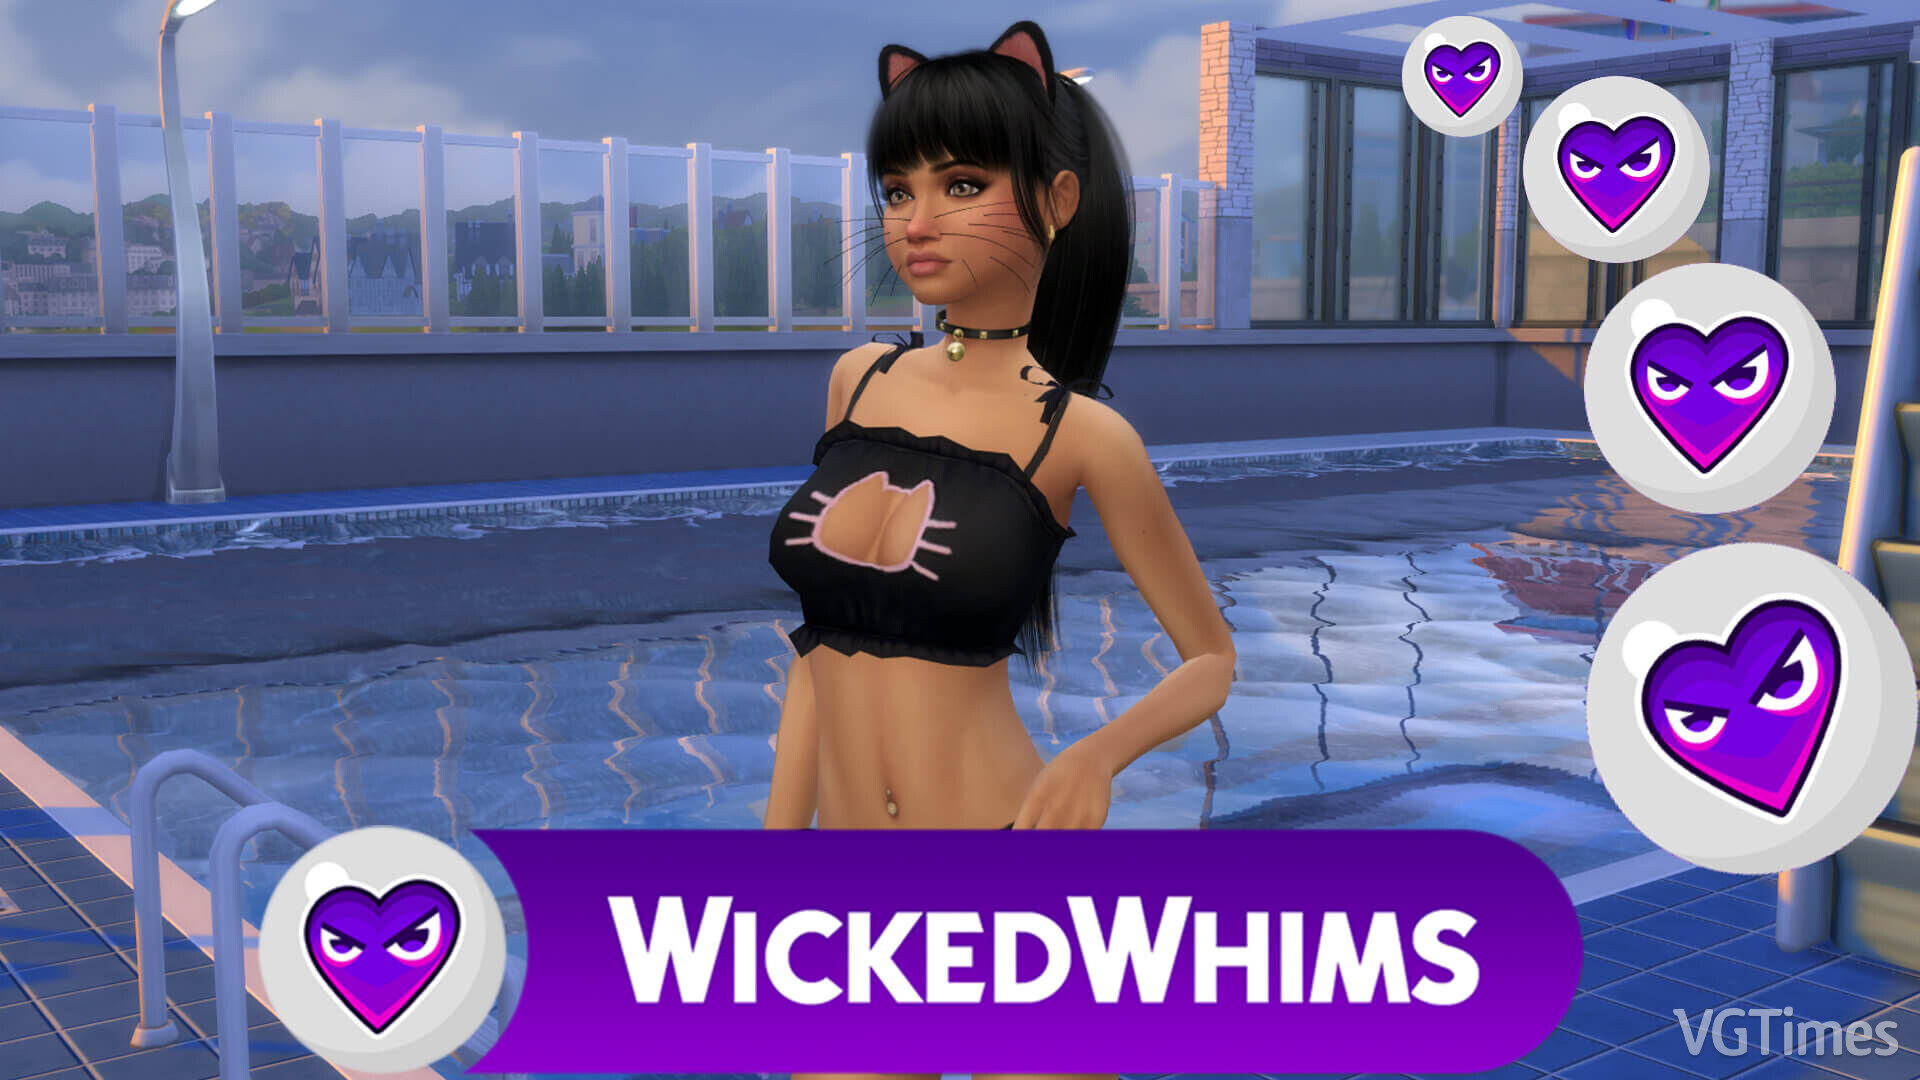 Wicked whims sims 4 русификатор последняя версия. Симс 4 вуху. Симс 4 Wicked. Симс викед Вимс. Симс 4 мод на вуху.